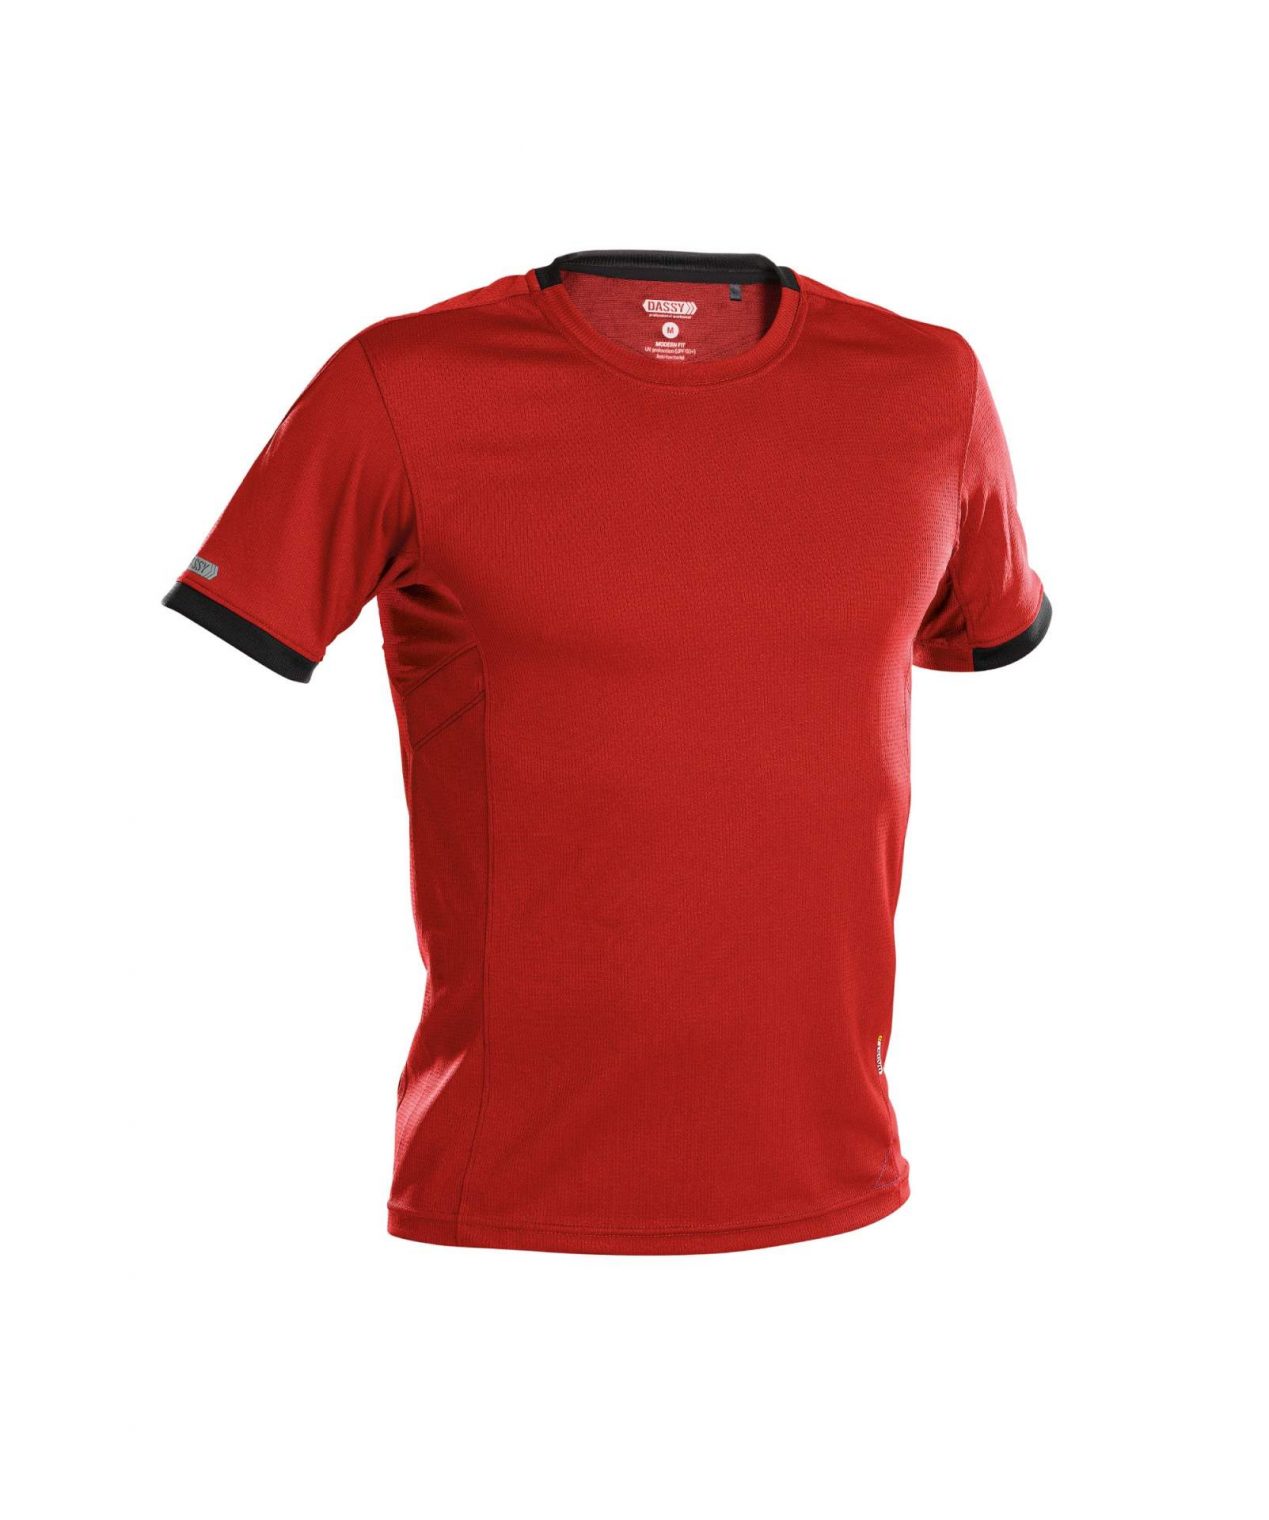 nexus t shirt red black front